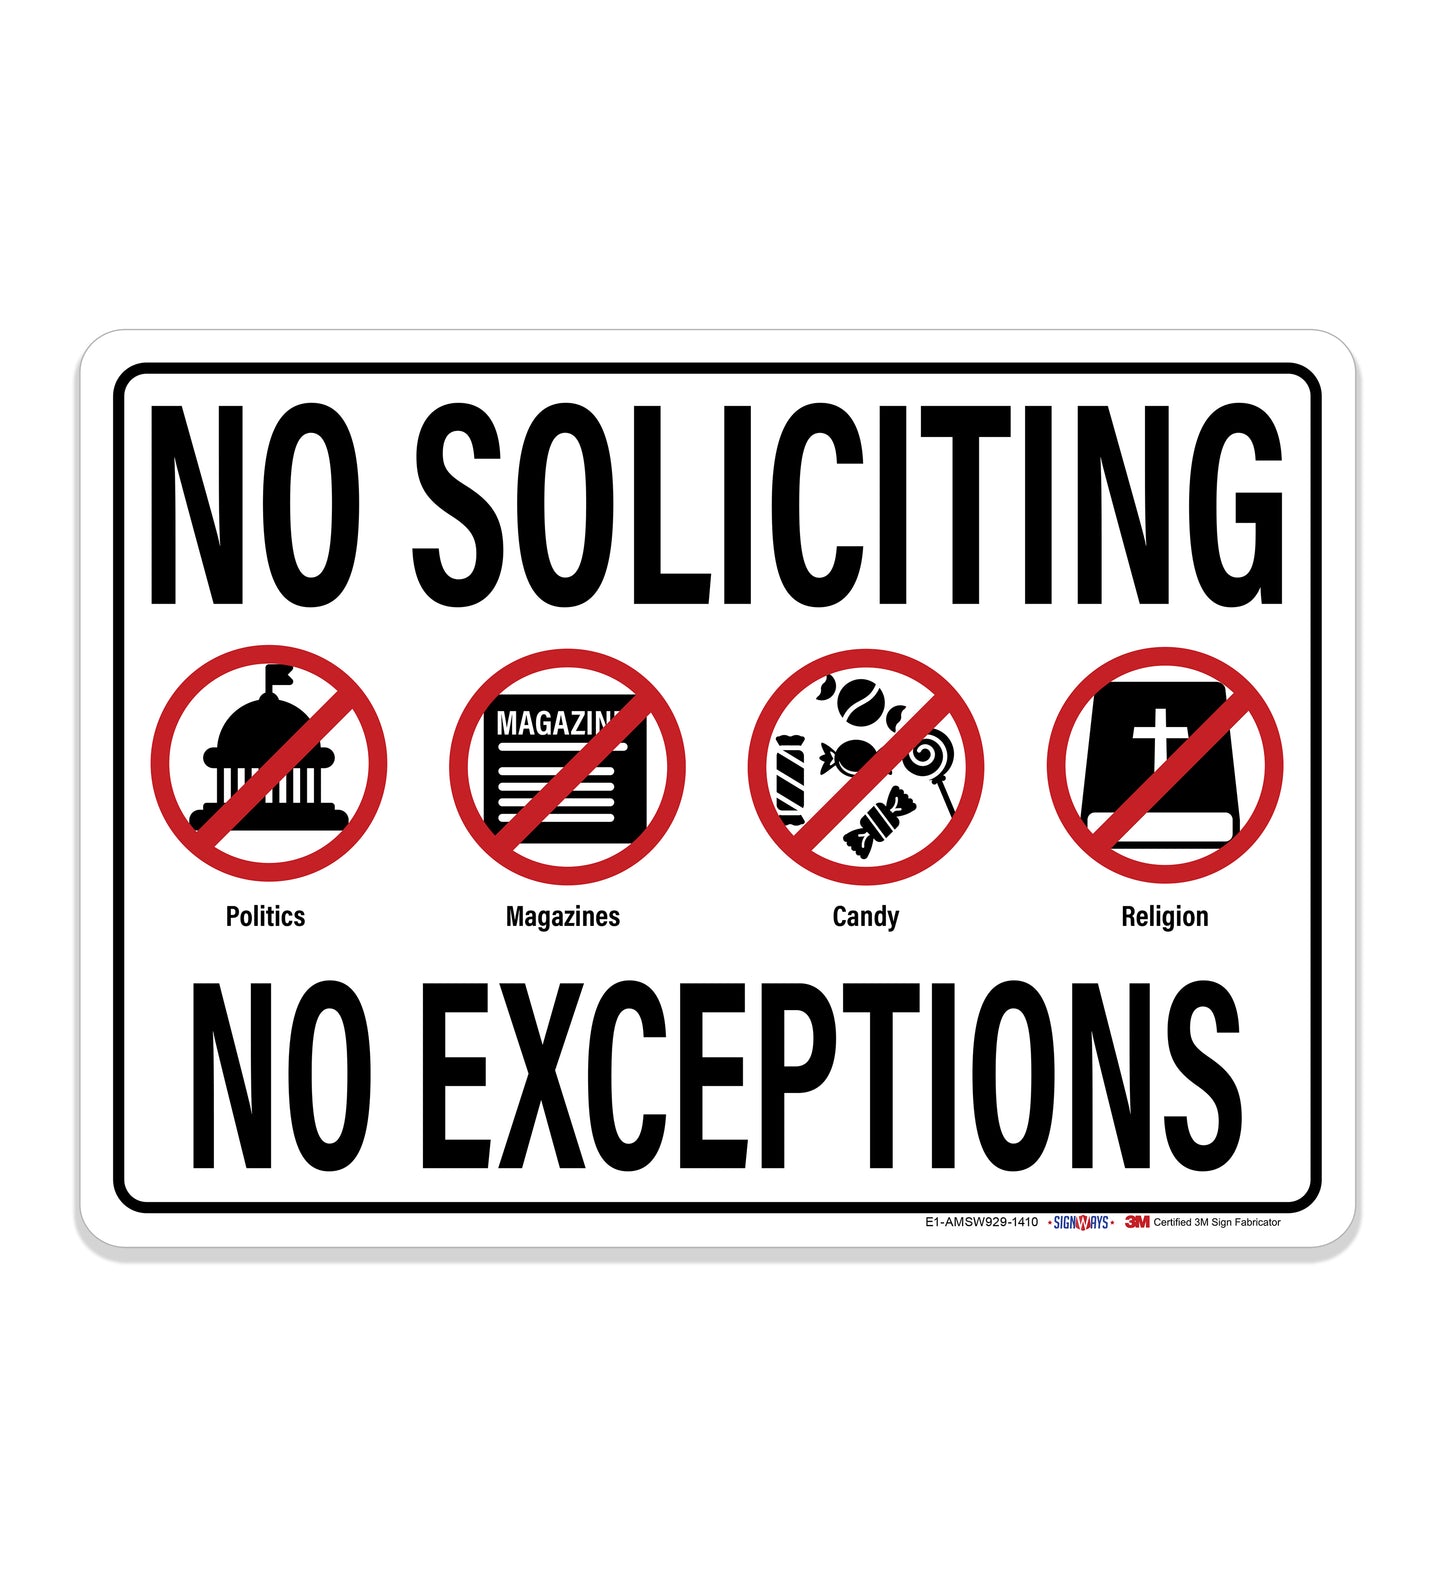 No Soliciting No Exceptions (Symbols) Sign